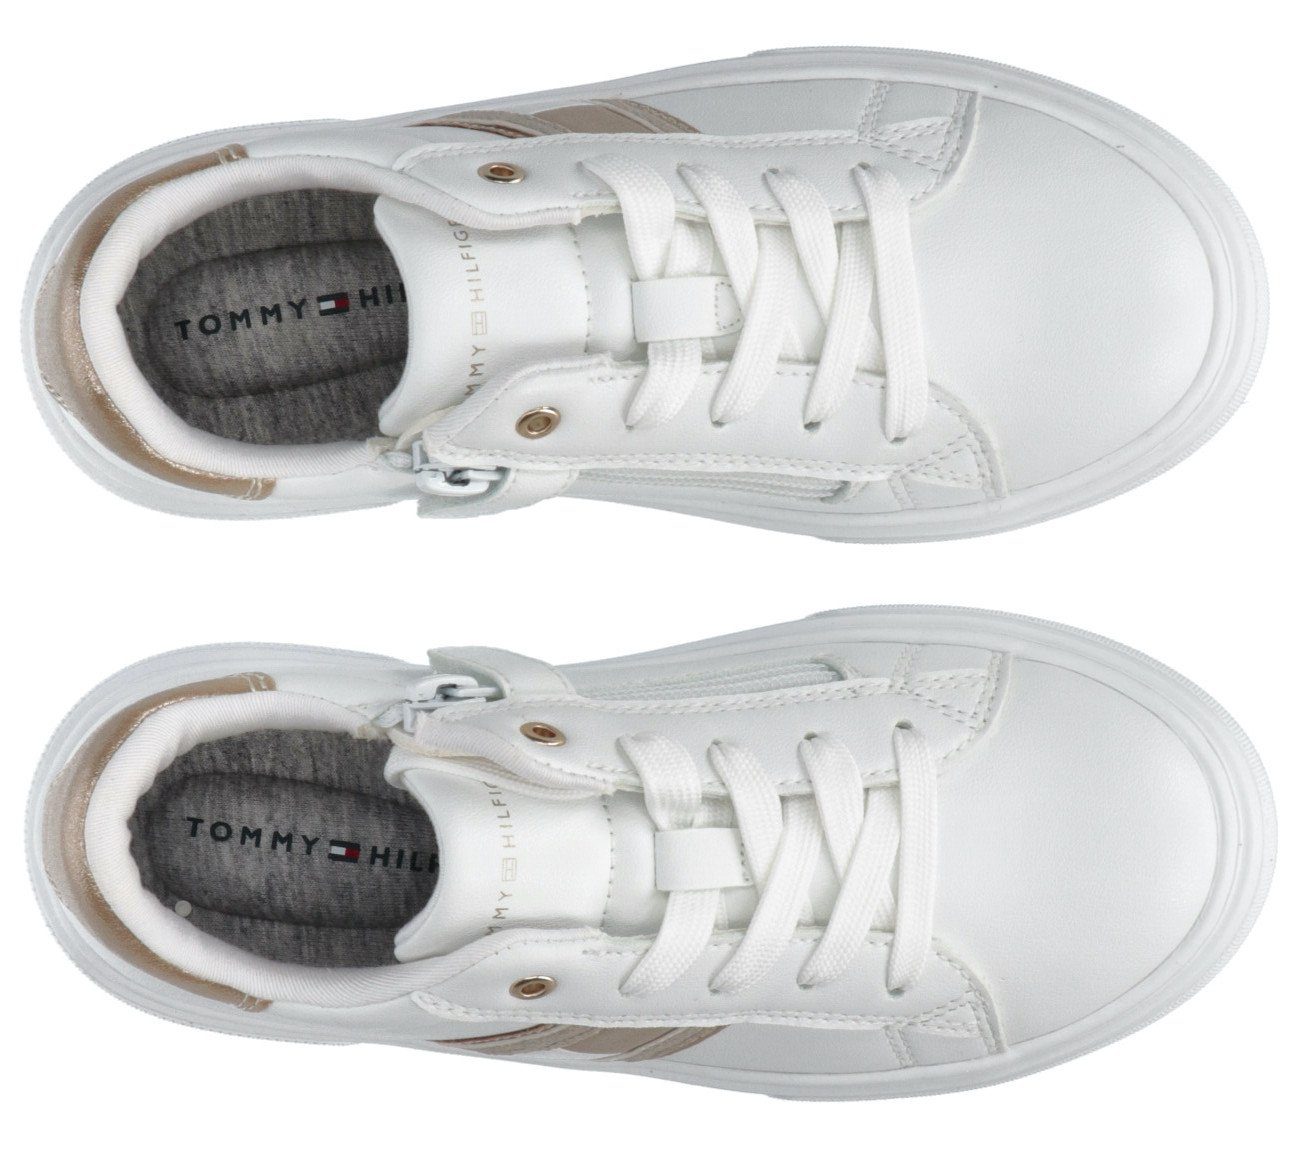 Tommy Hilfiger FLAG LOW CUT Sneaker SNEAKER LACE-UP weiß-goldfarben mit Reißverschluss